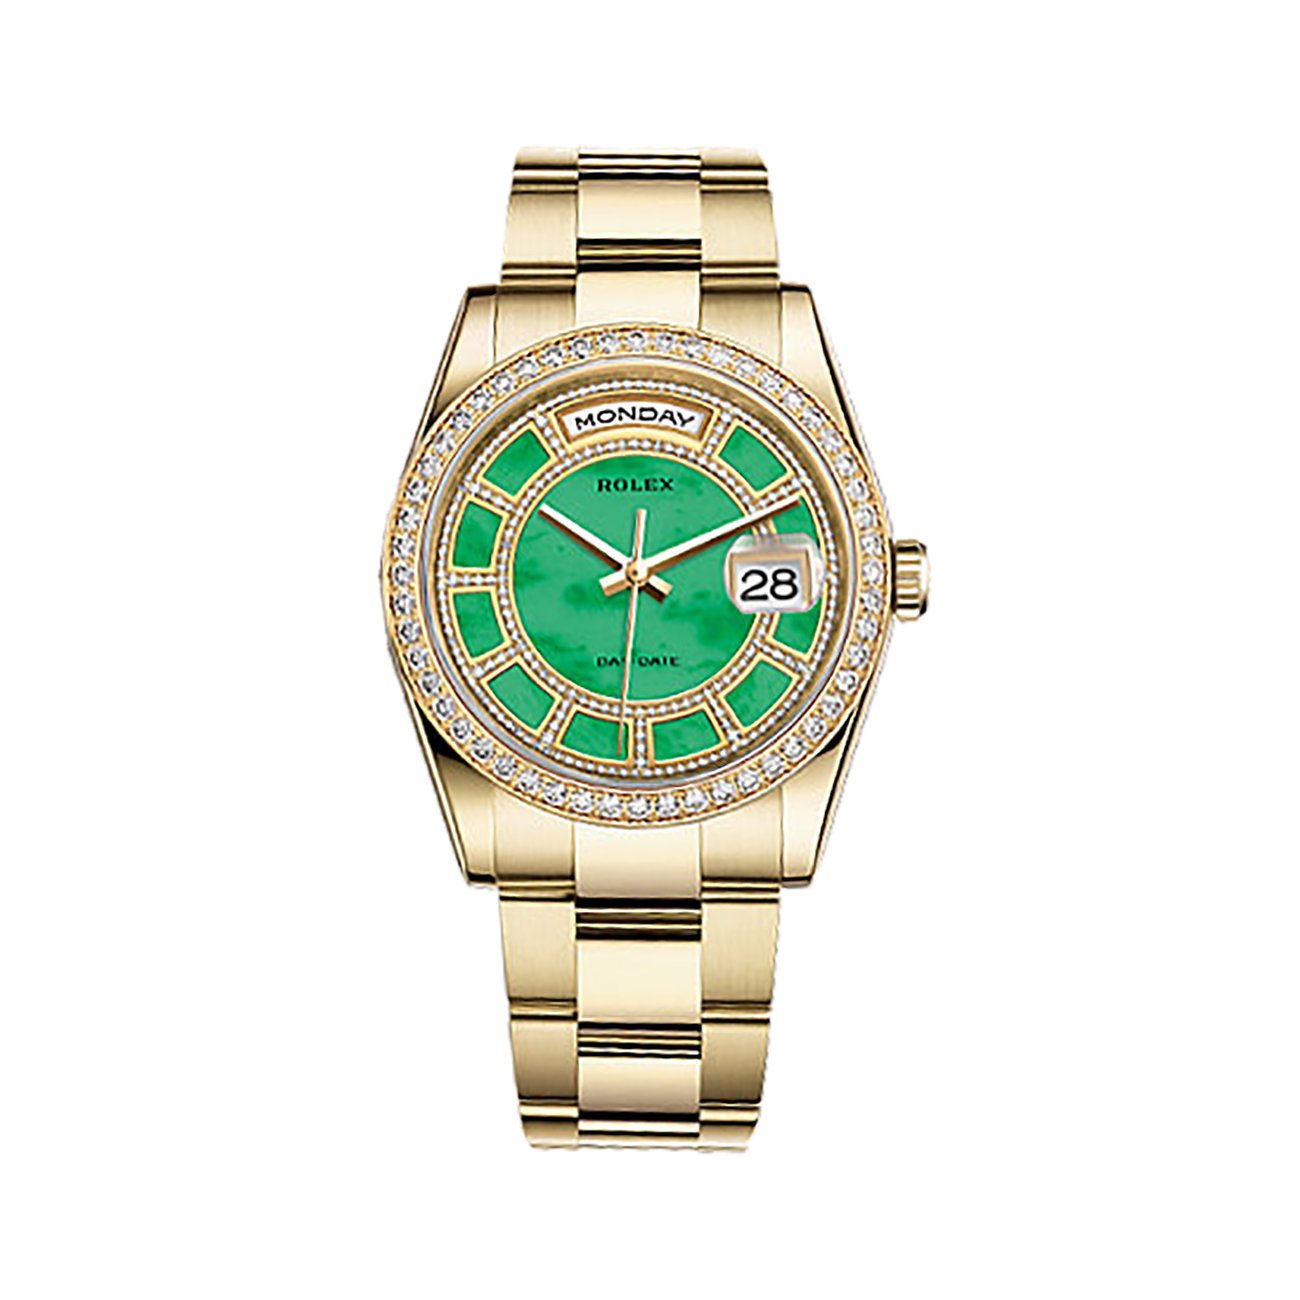 Day-Date 36 118348 Gold & Diamonds Watch (Carousel of Green Jade)